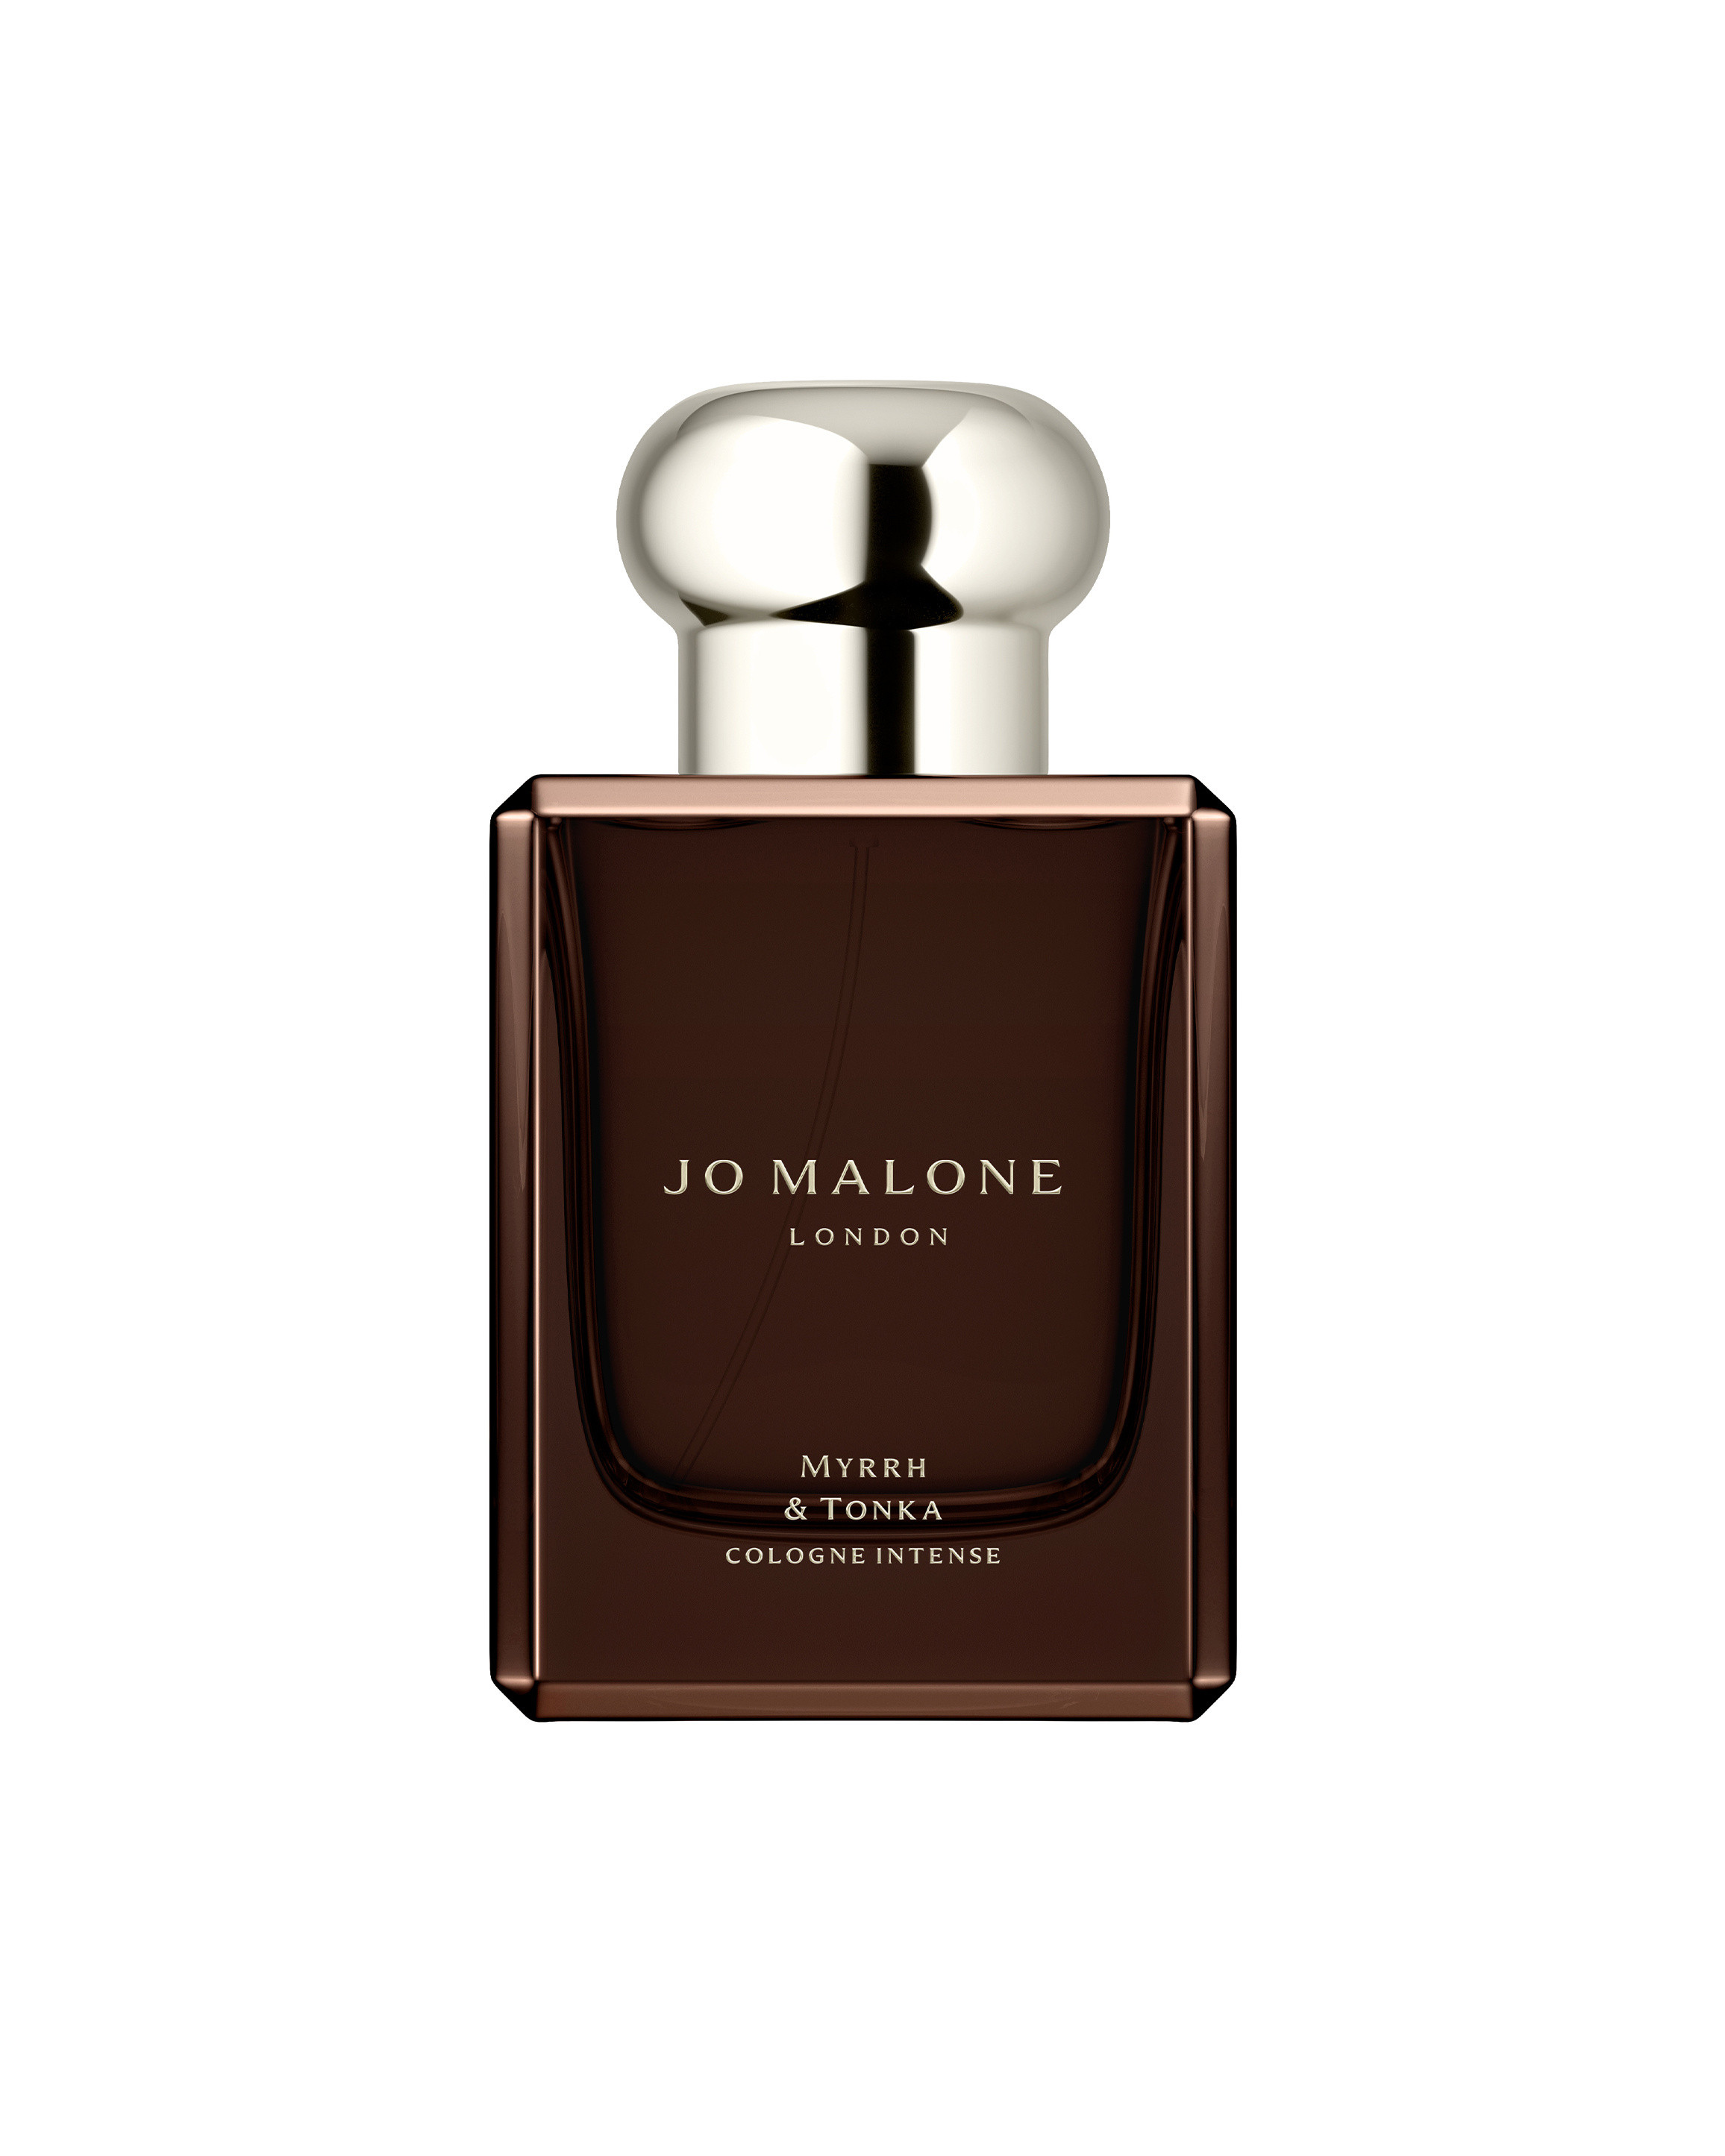 Jo Malone Myrrh & Tonka Cologne Intense 50 ml, Brown, large image number 0